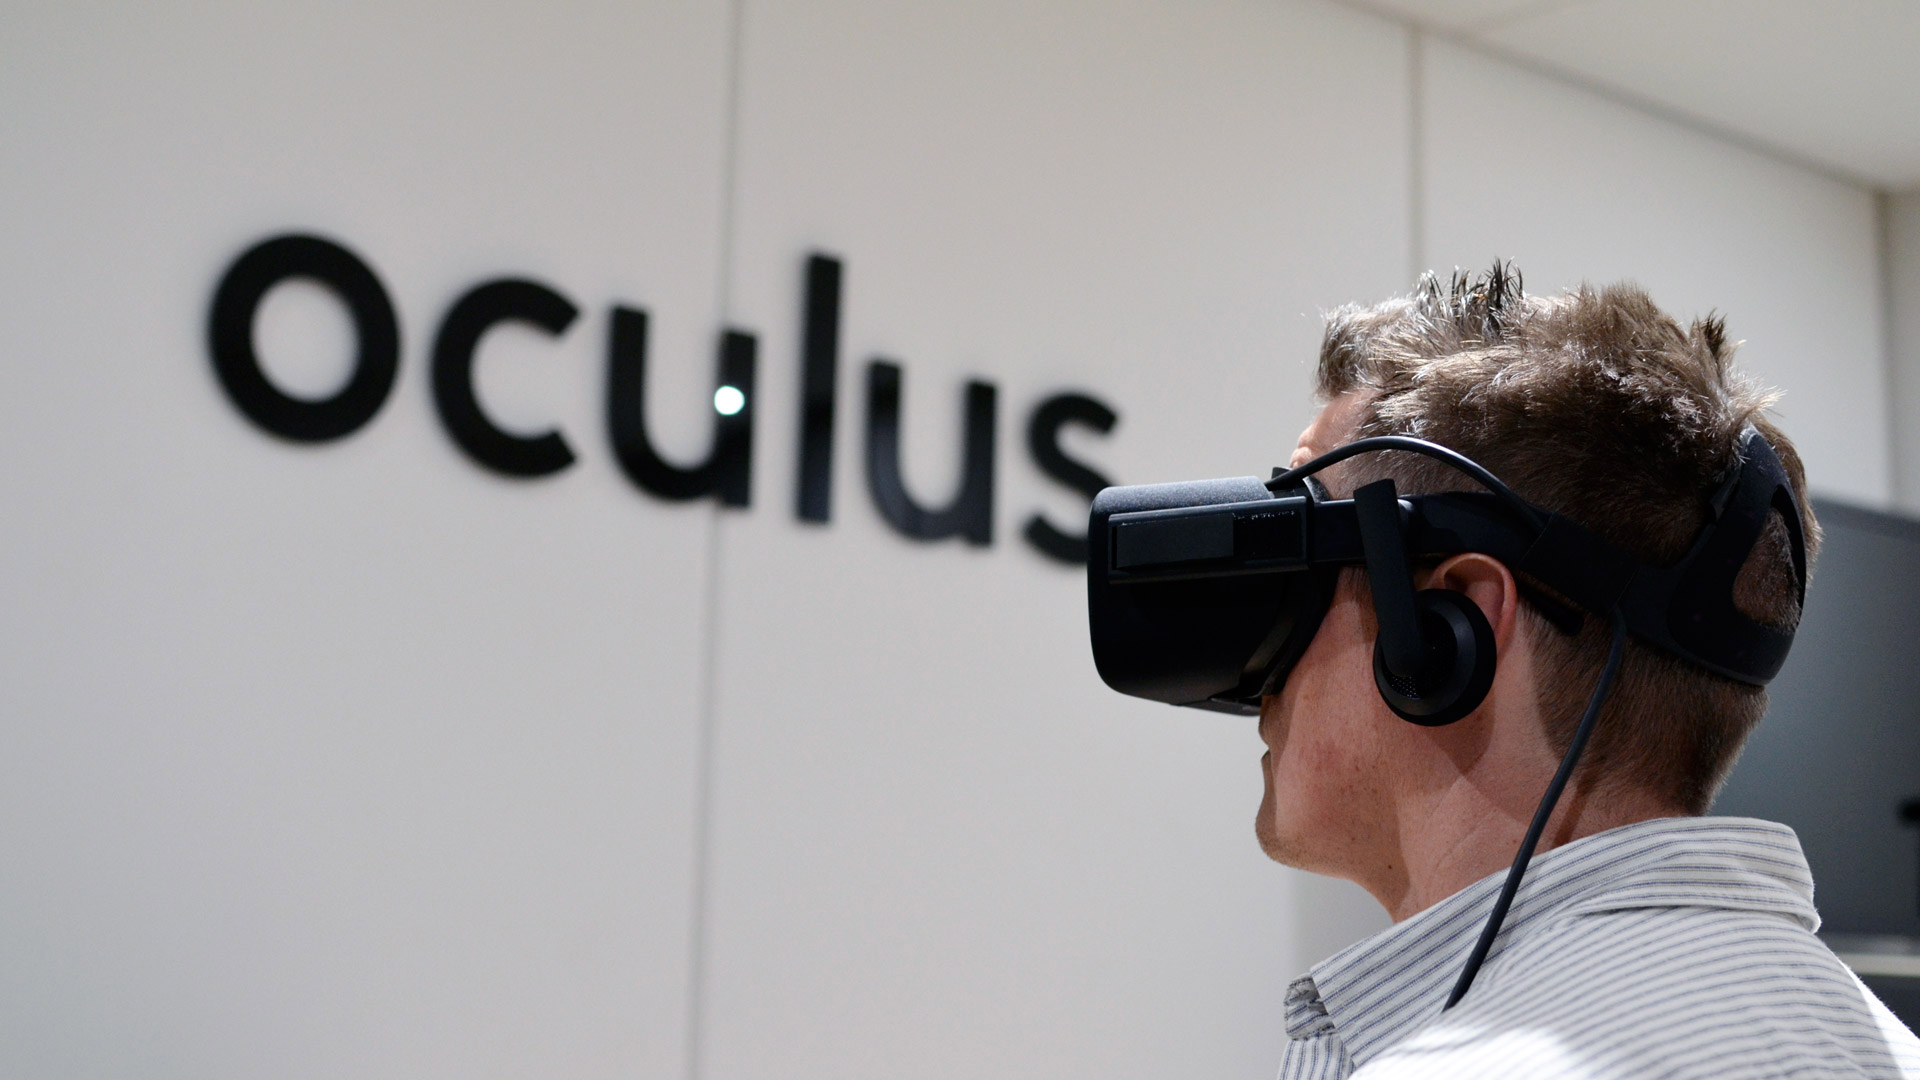 oculus rift without facebook